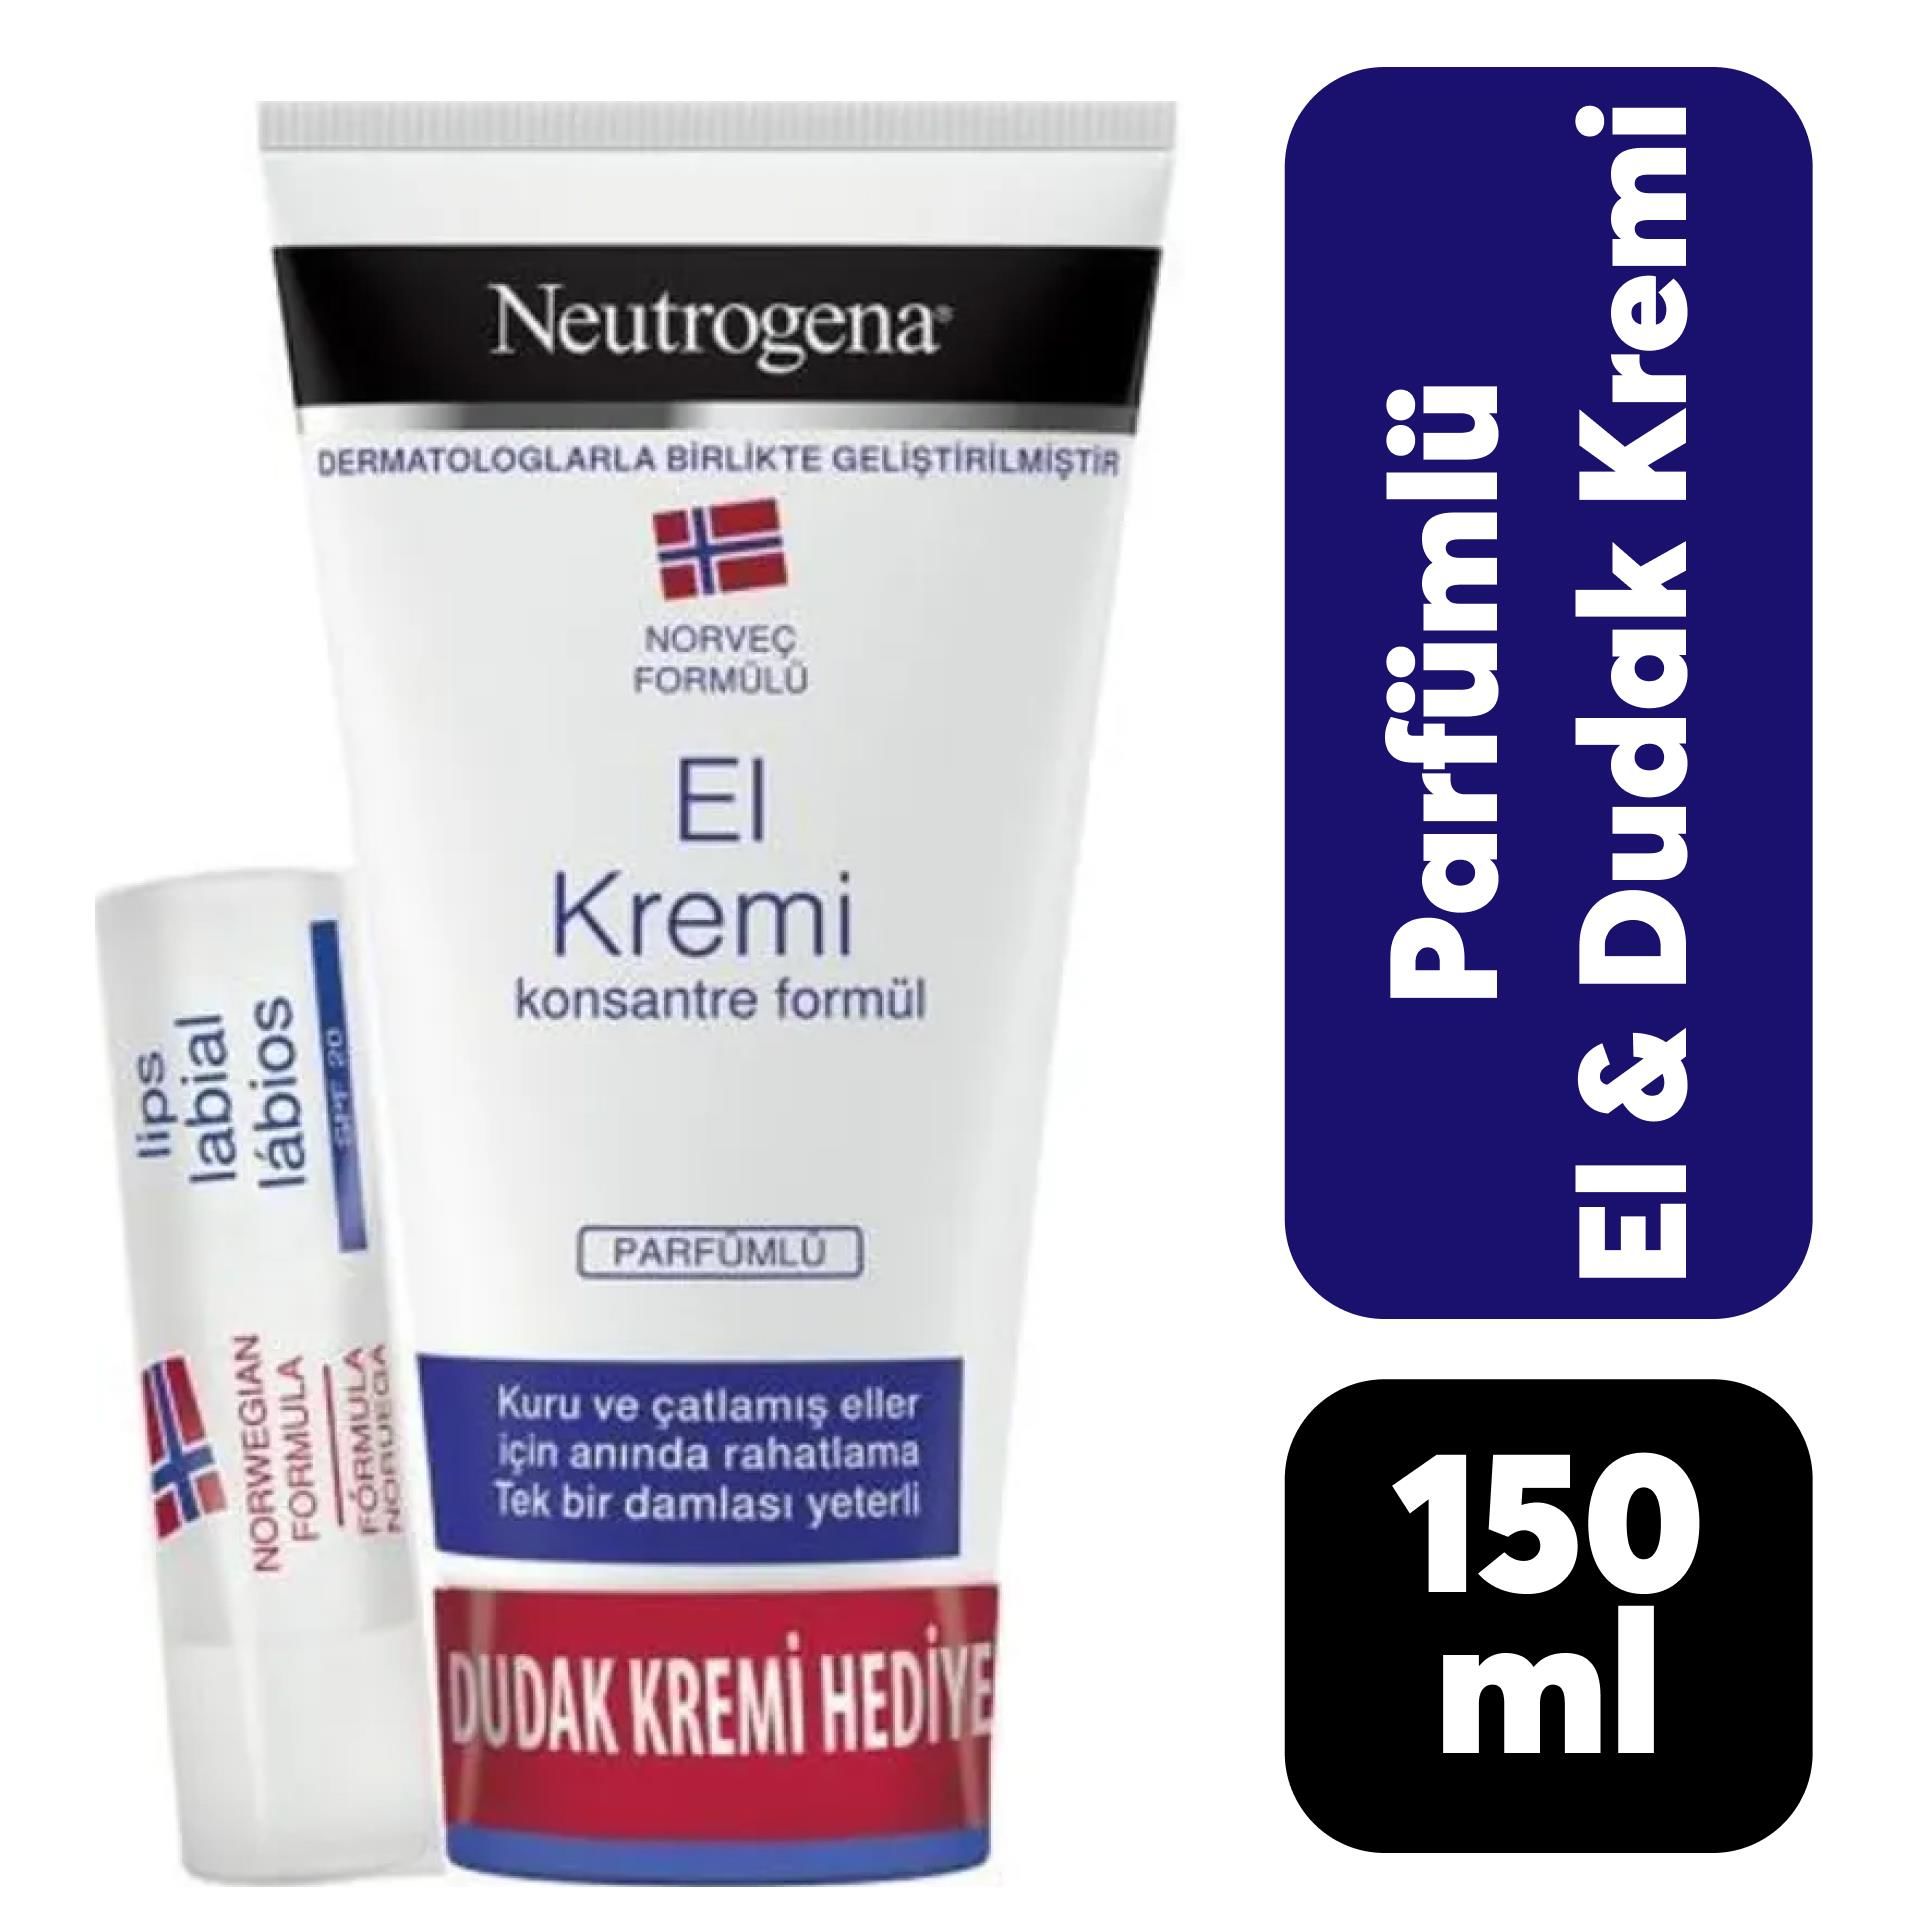 Neutrogena El Kremi 75 ml Parfümlü + Dudak Kremi